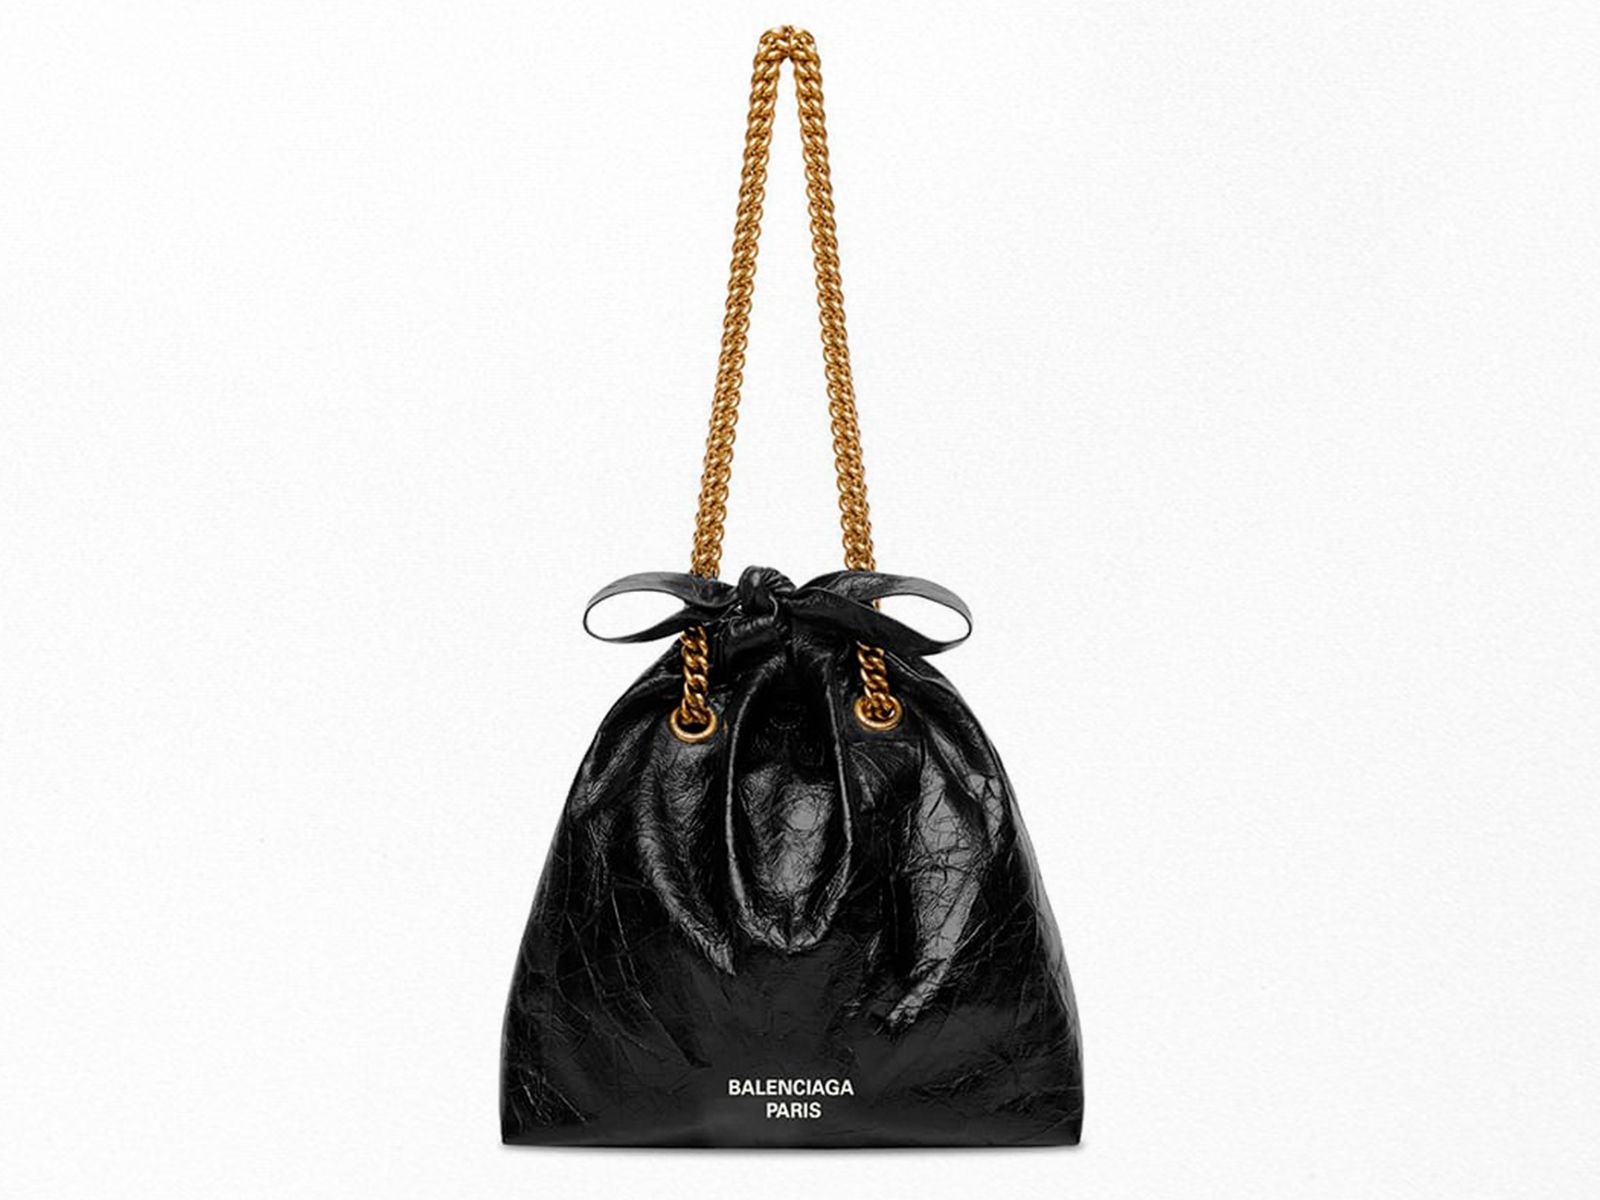 Balenciaga’s Crush Tote… An elevated update on the Trash Bag?